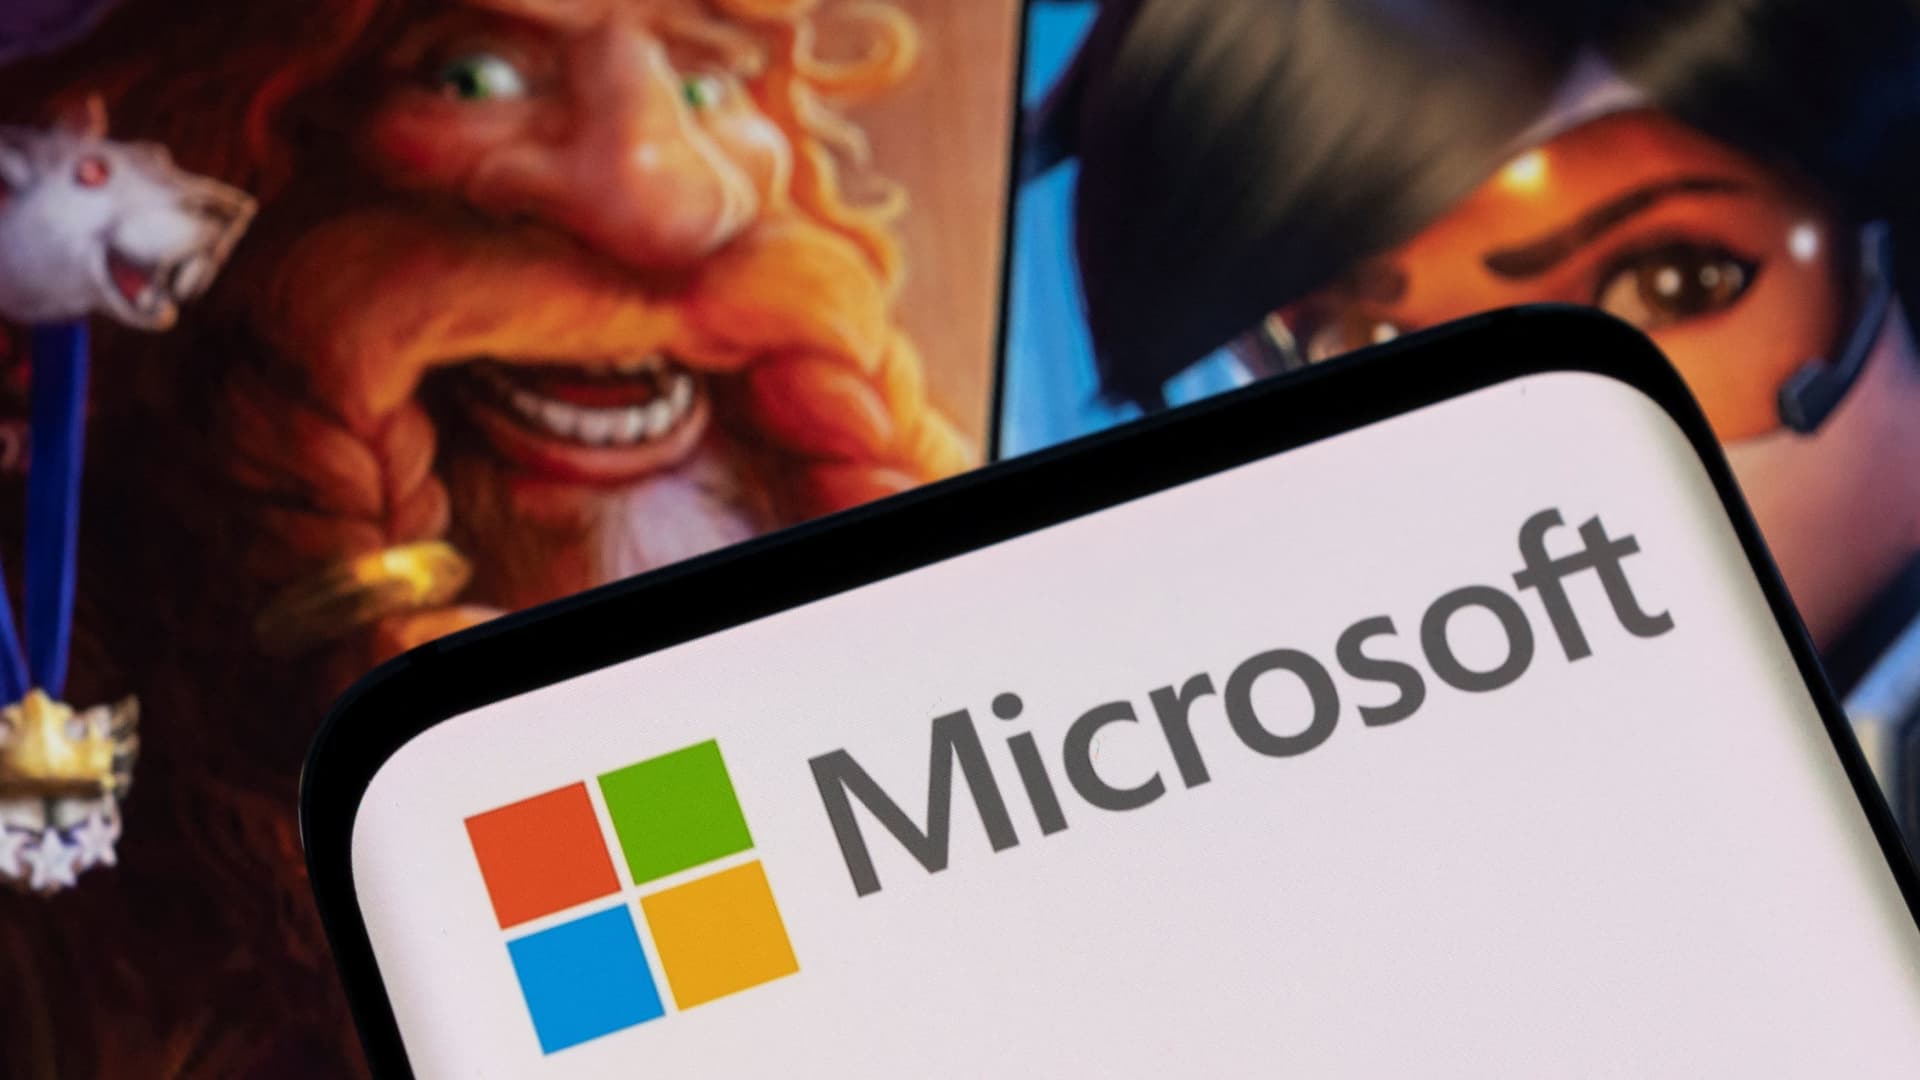 EU approves Microsoft’s $69 billion acquisition of Activision Blizzard, clearing major hurdle